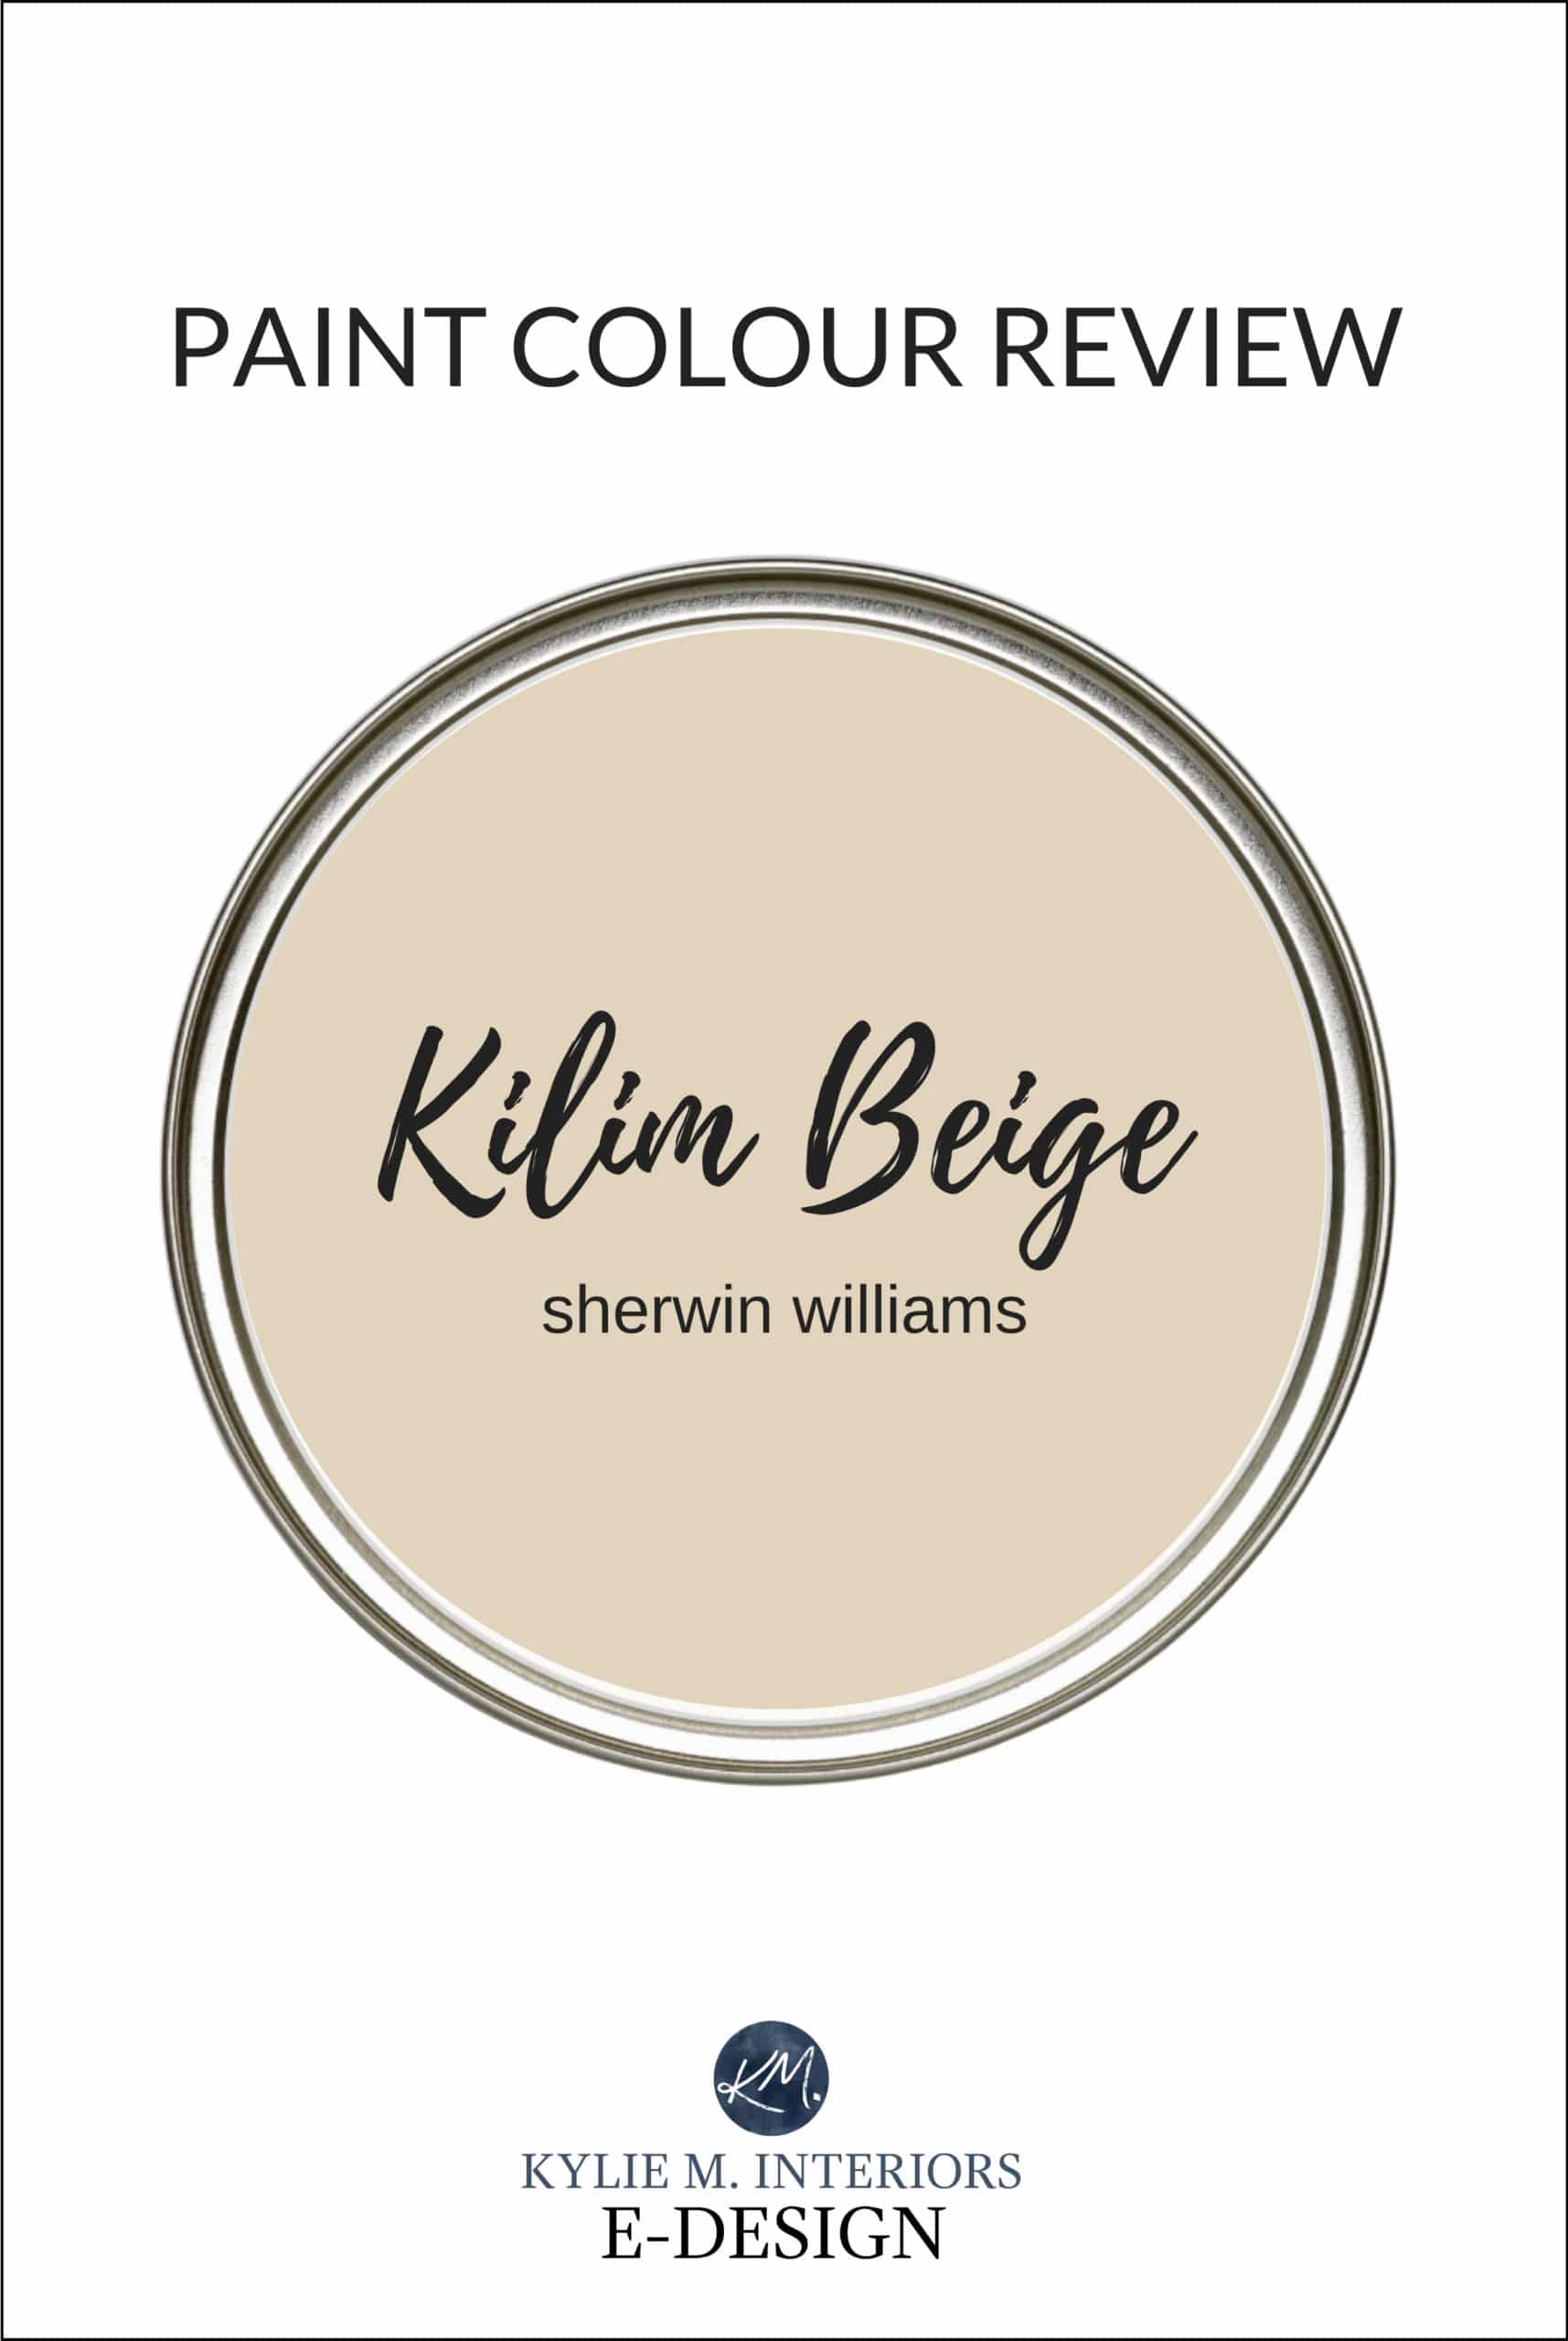 Paint colour review, the best warm beige neutral paint color, Sherwin Williams Kilim Beige. Kylie M Interiors Edesign online diy decorating and design advice